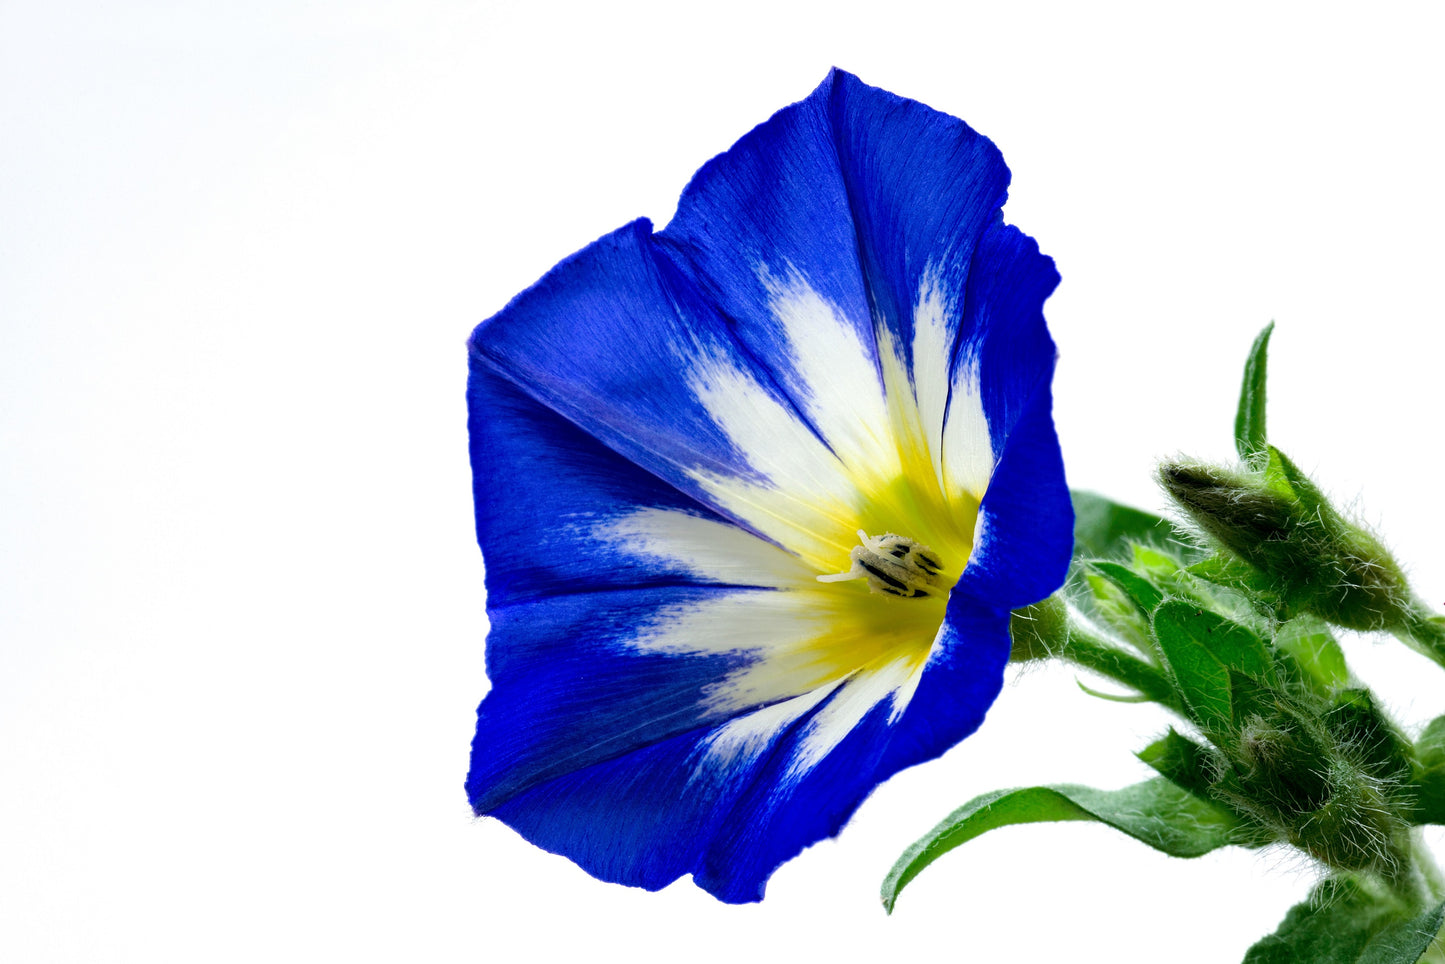 35 Blue Dwarf ROYAL ENSIGN MORNING GLORY Convolvulus Tricolor Royal Blue White & Yellow Flower Vine Seeds